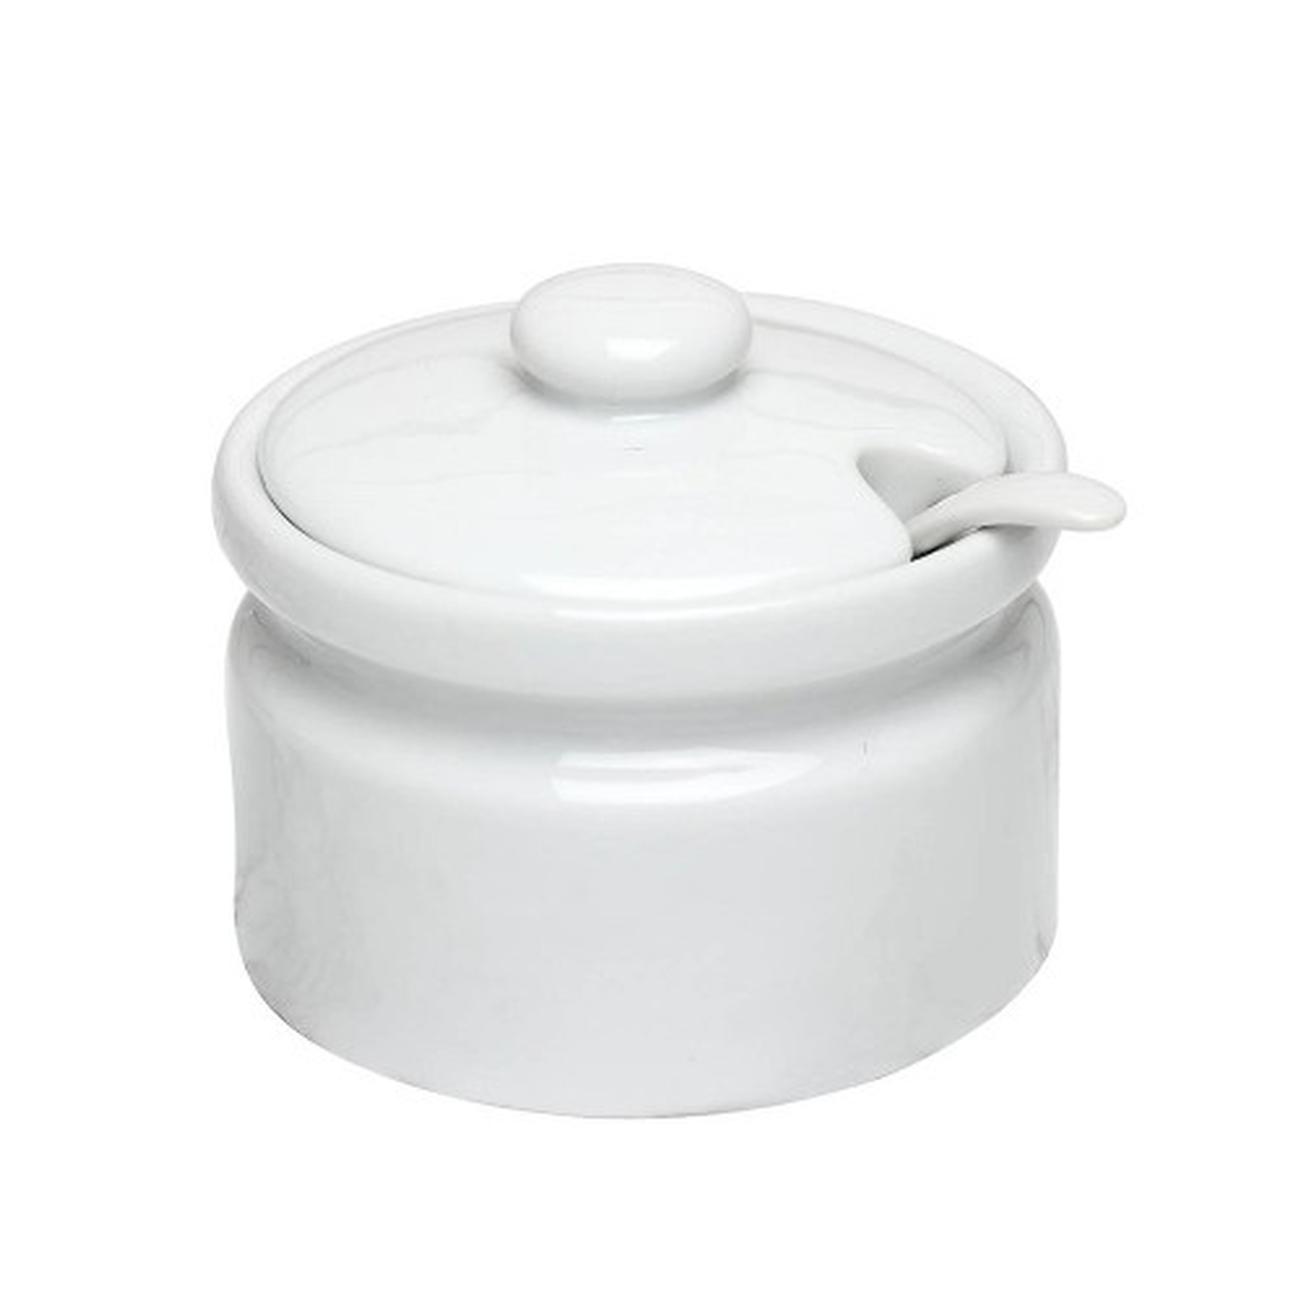 porcelain-lidded-pot-with-spoon-sugar-jam - Porcelain Lidded Sugar Jam Pot with Spoon